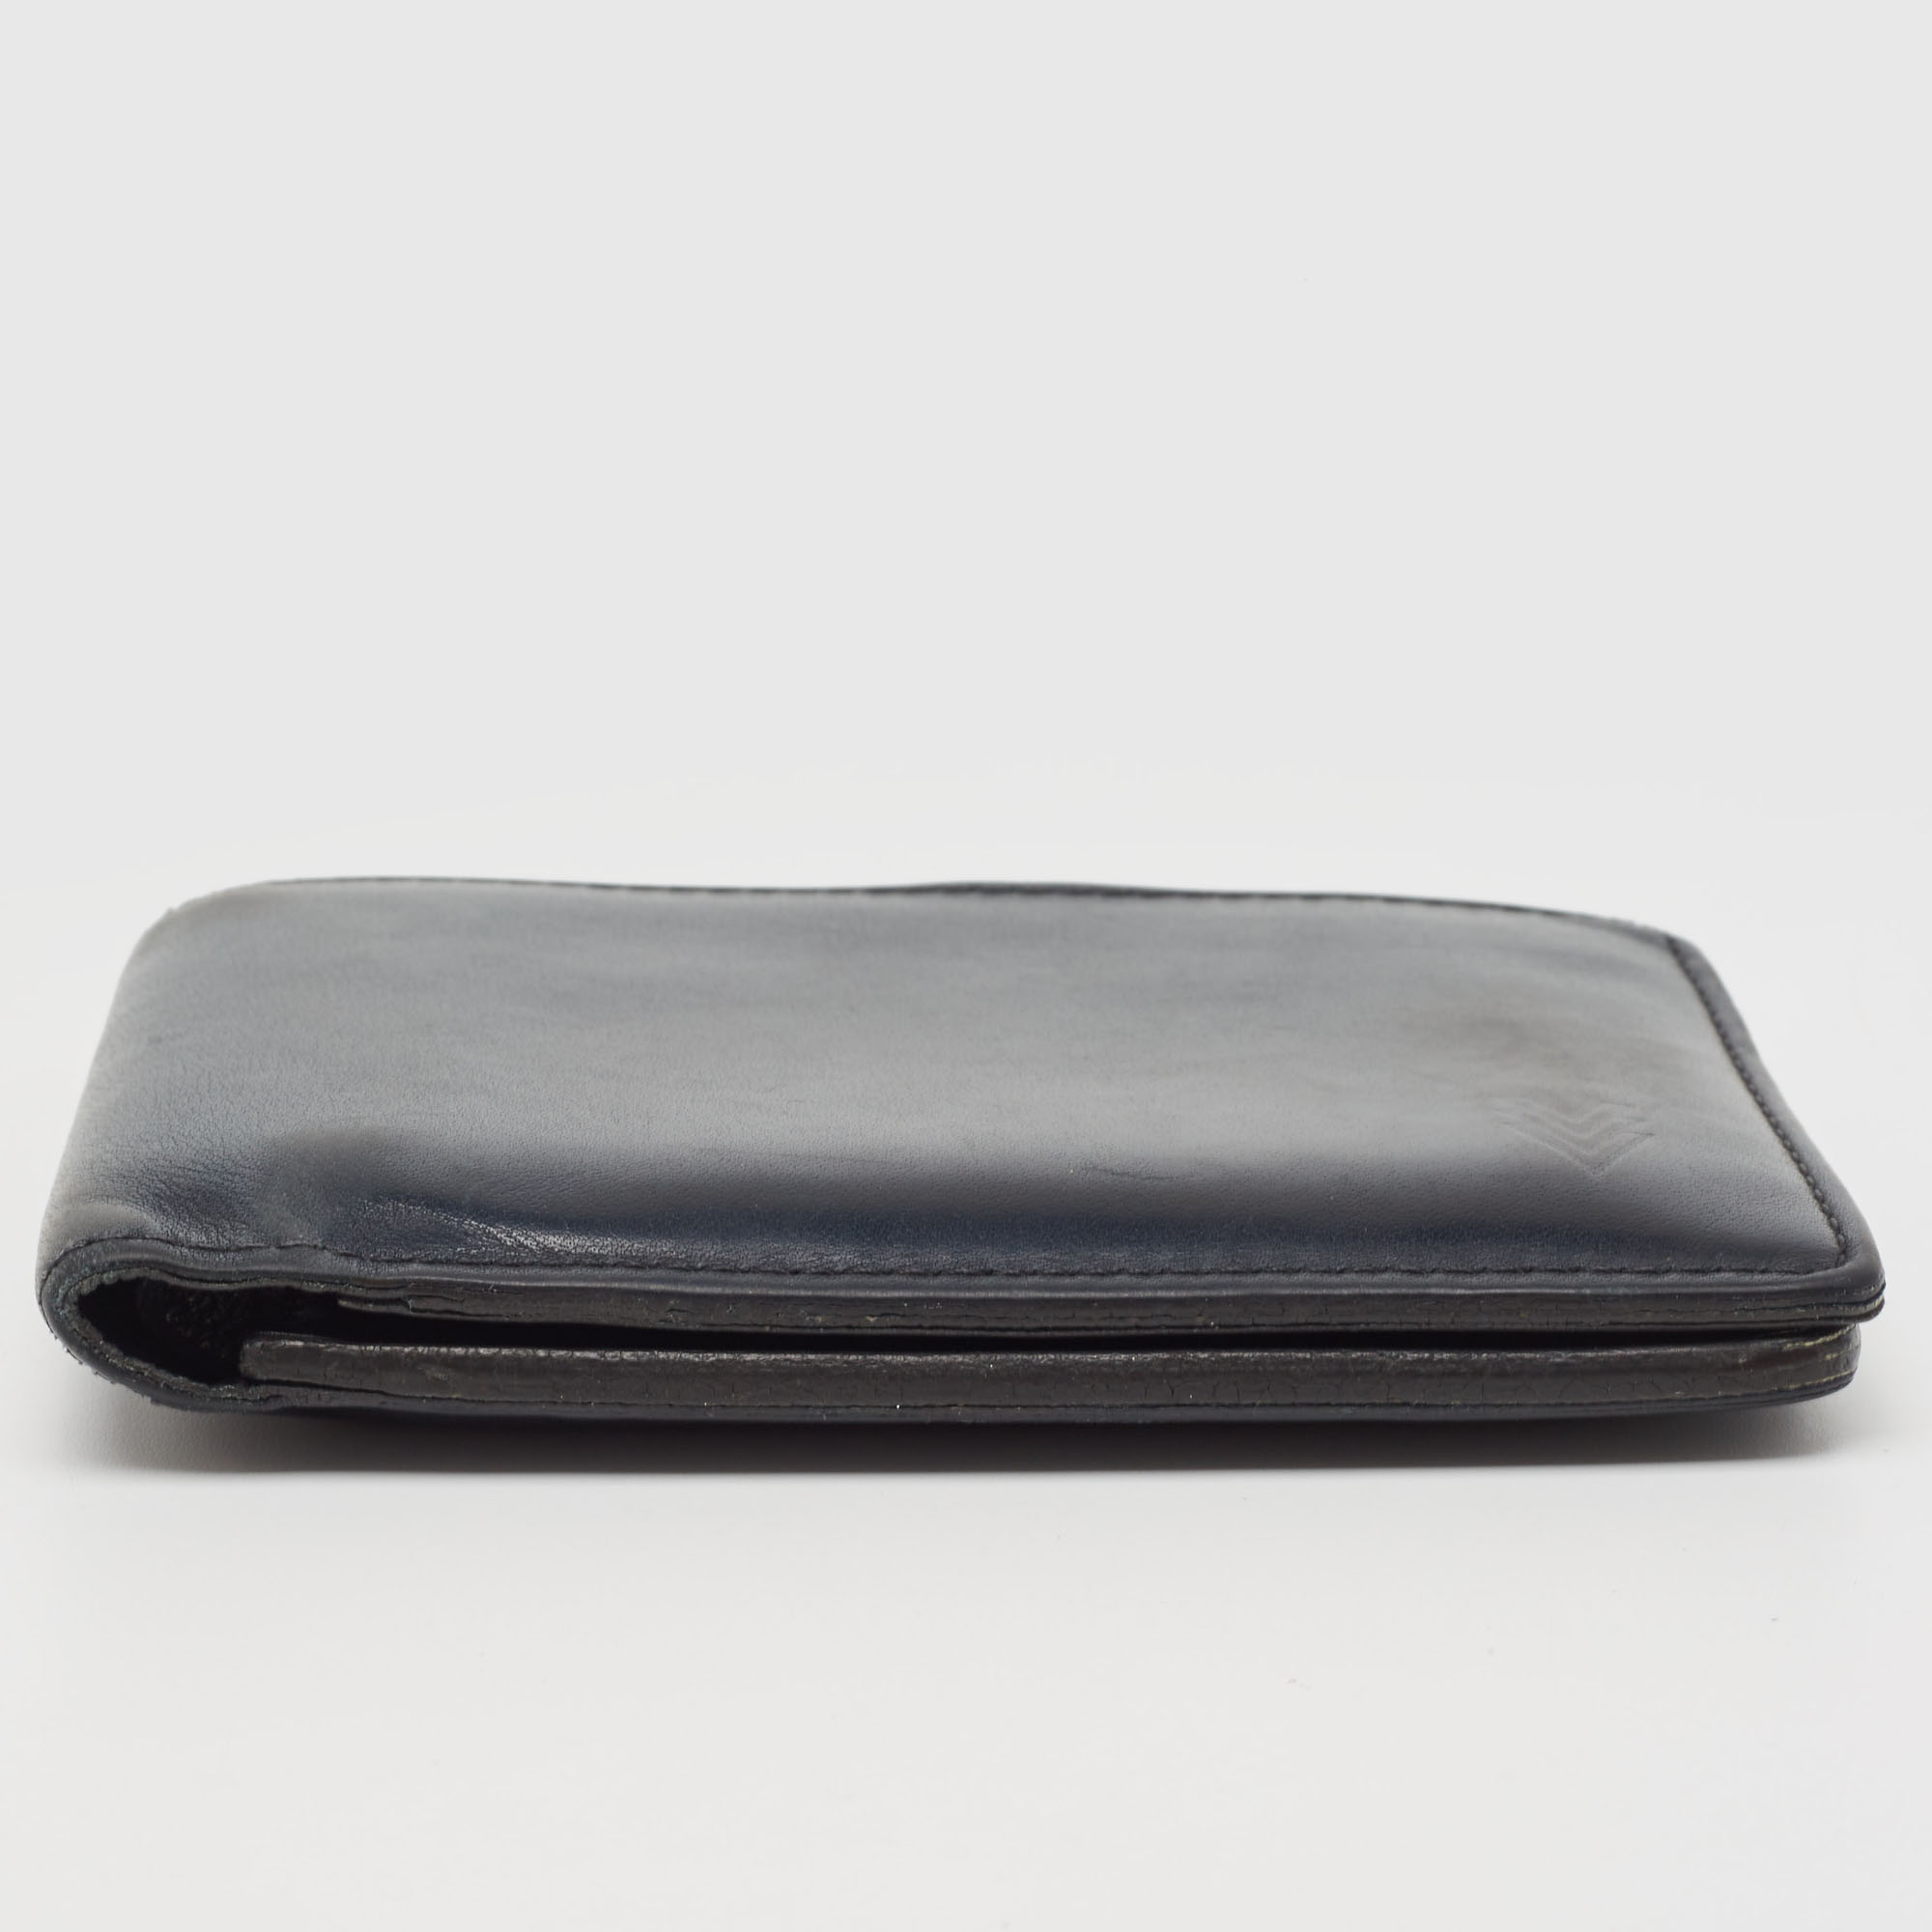 Louis Vuitton Navy Blue Leather Bifold Wallet